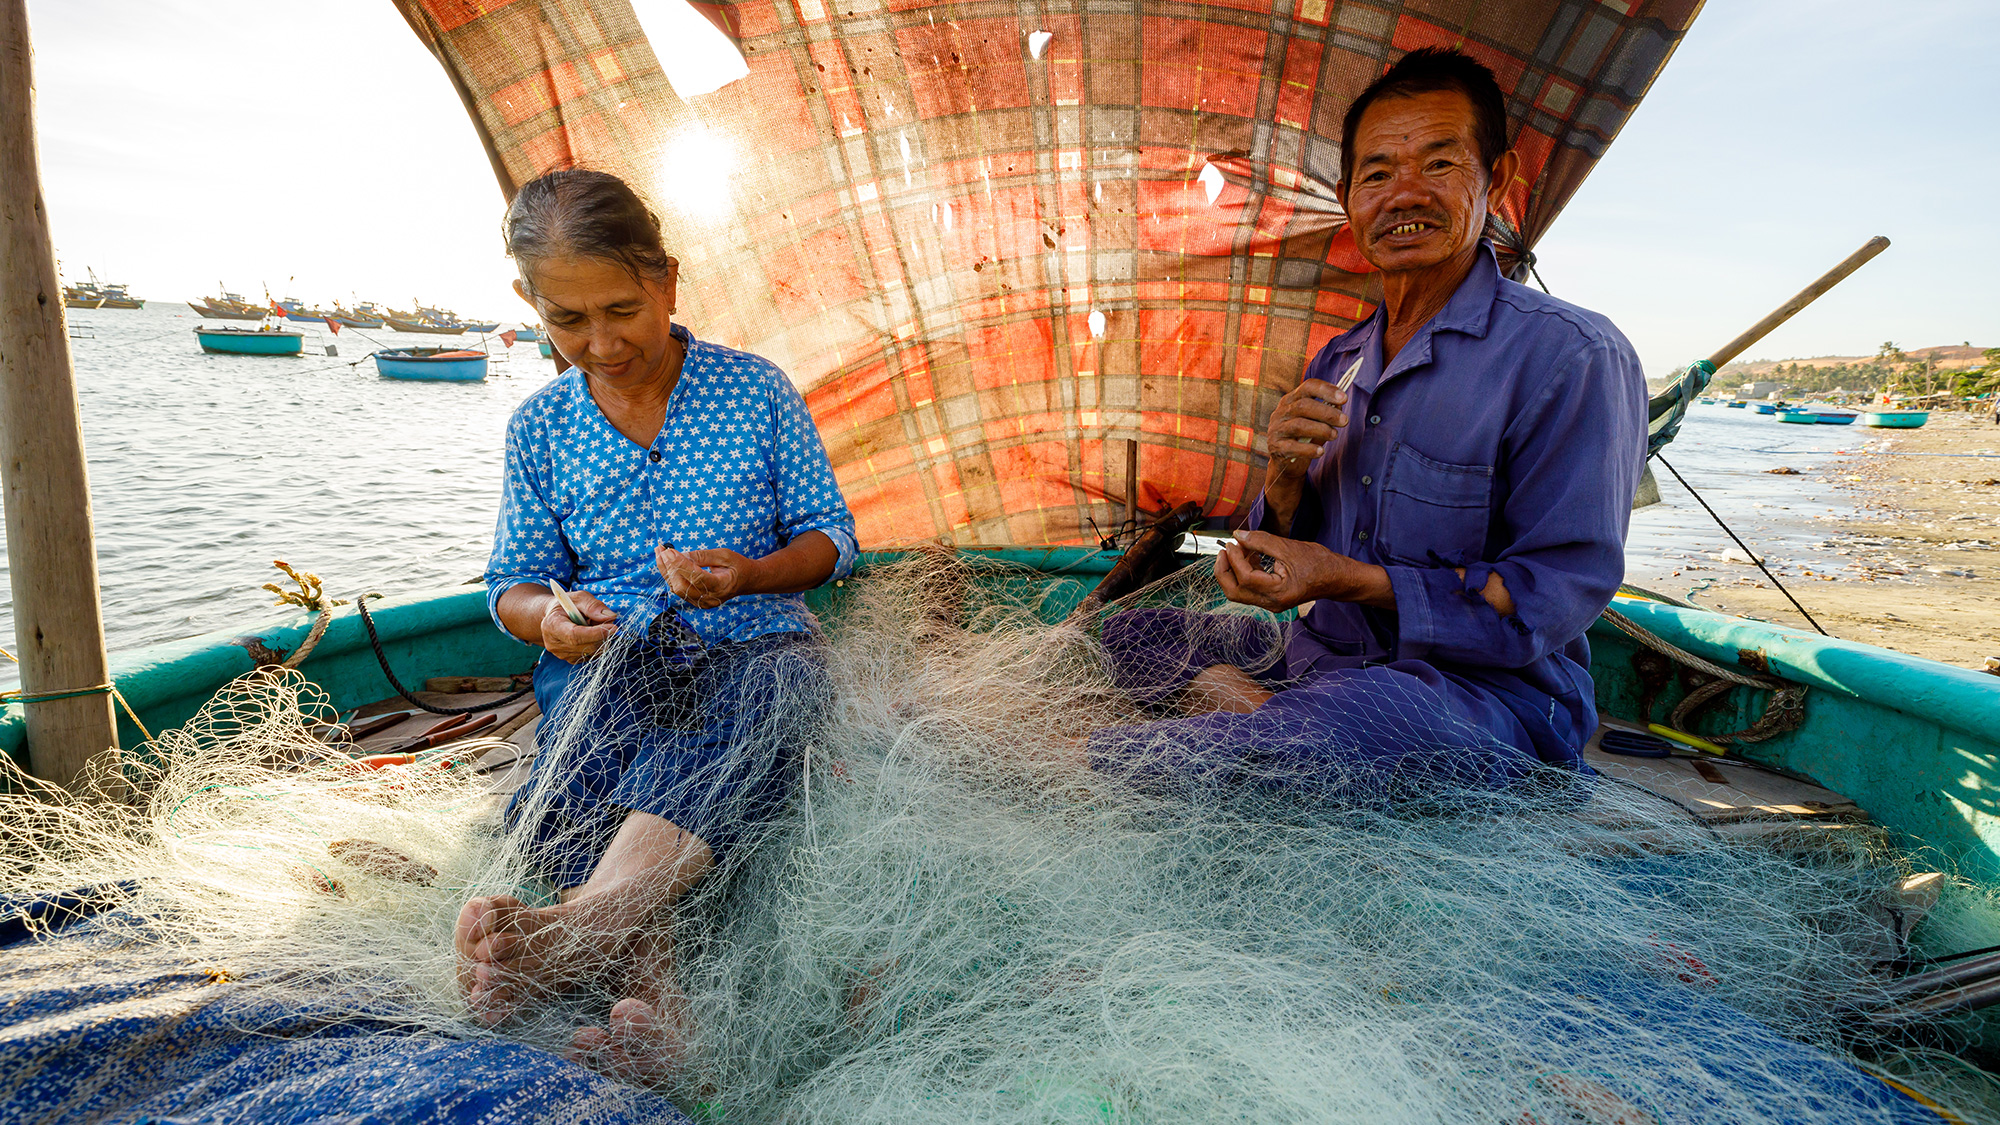 fishers repairing a net